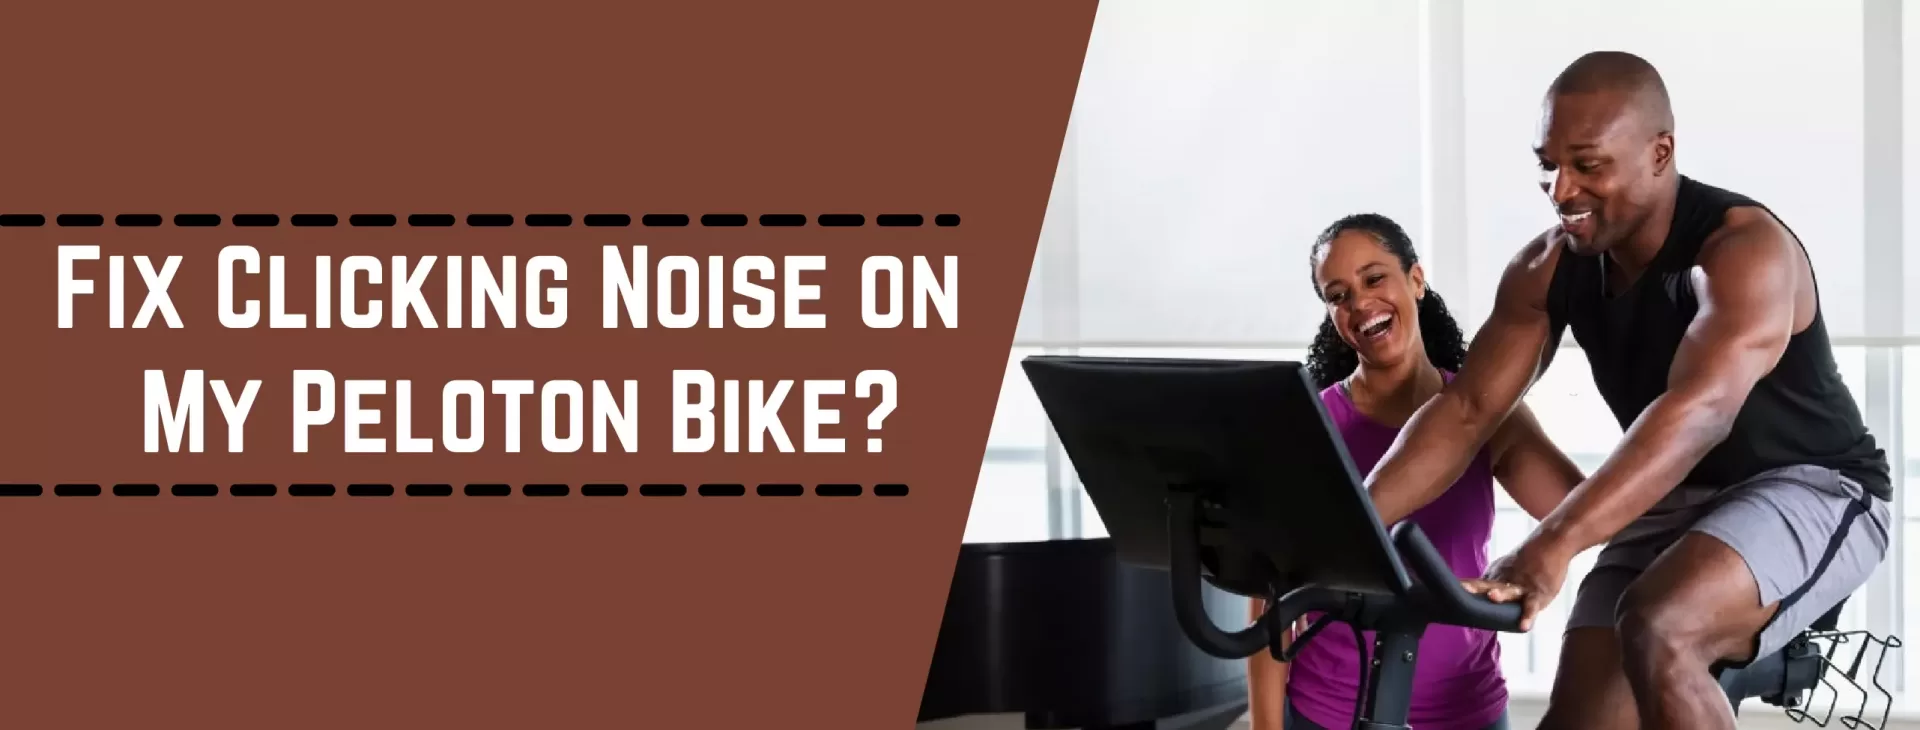 Fix Clicking Noise on My Peloton Bike